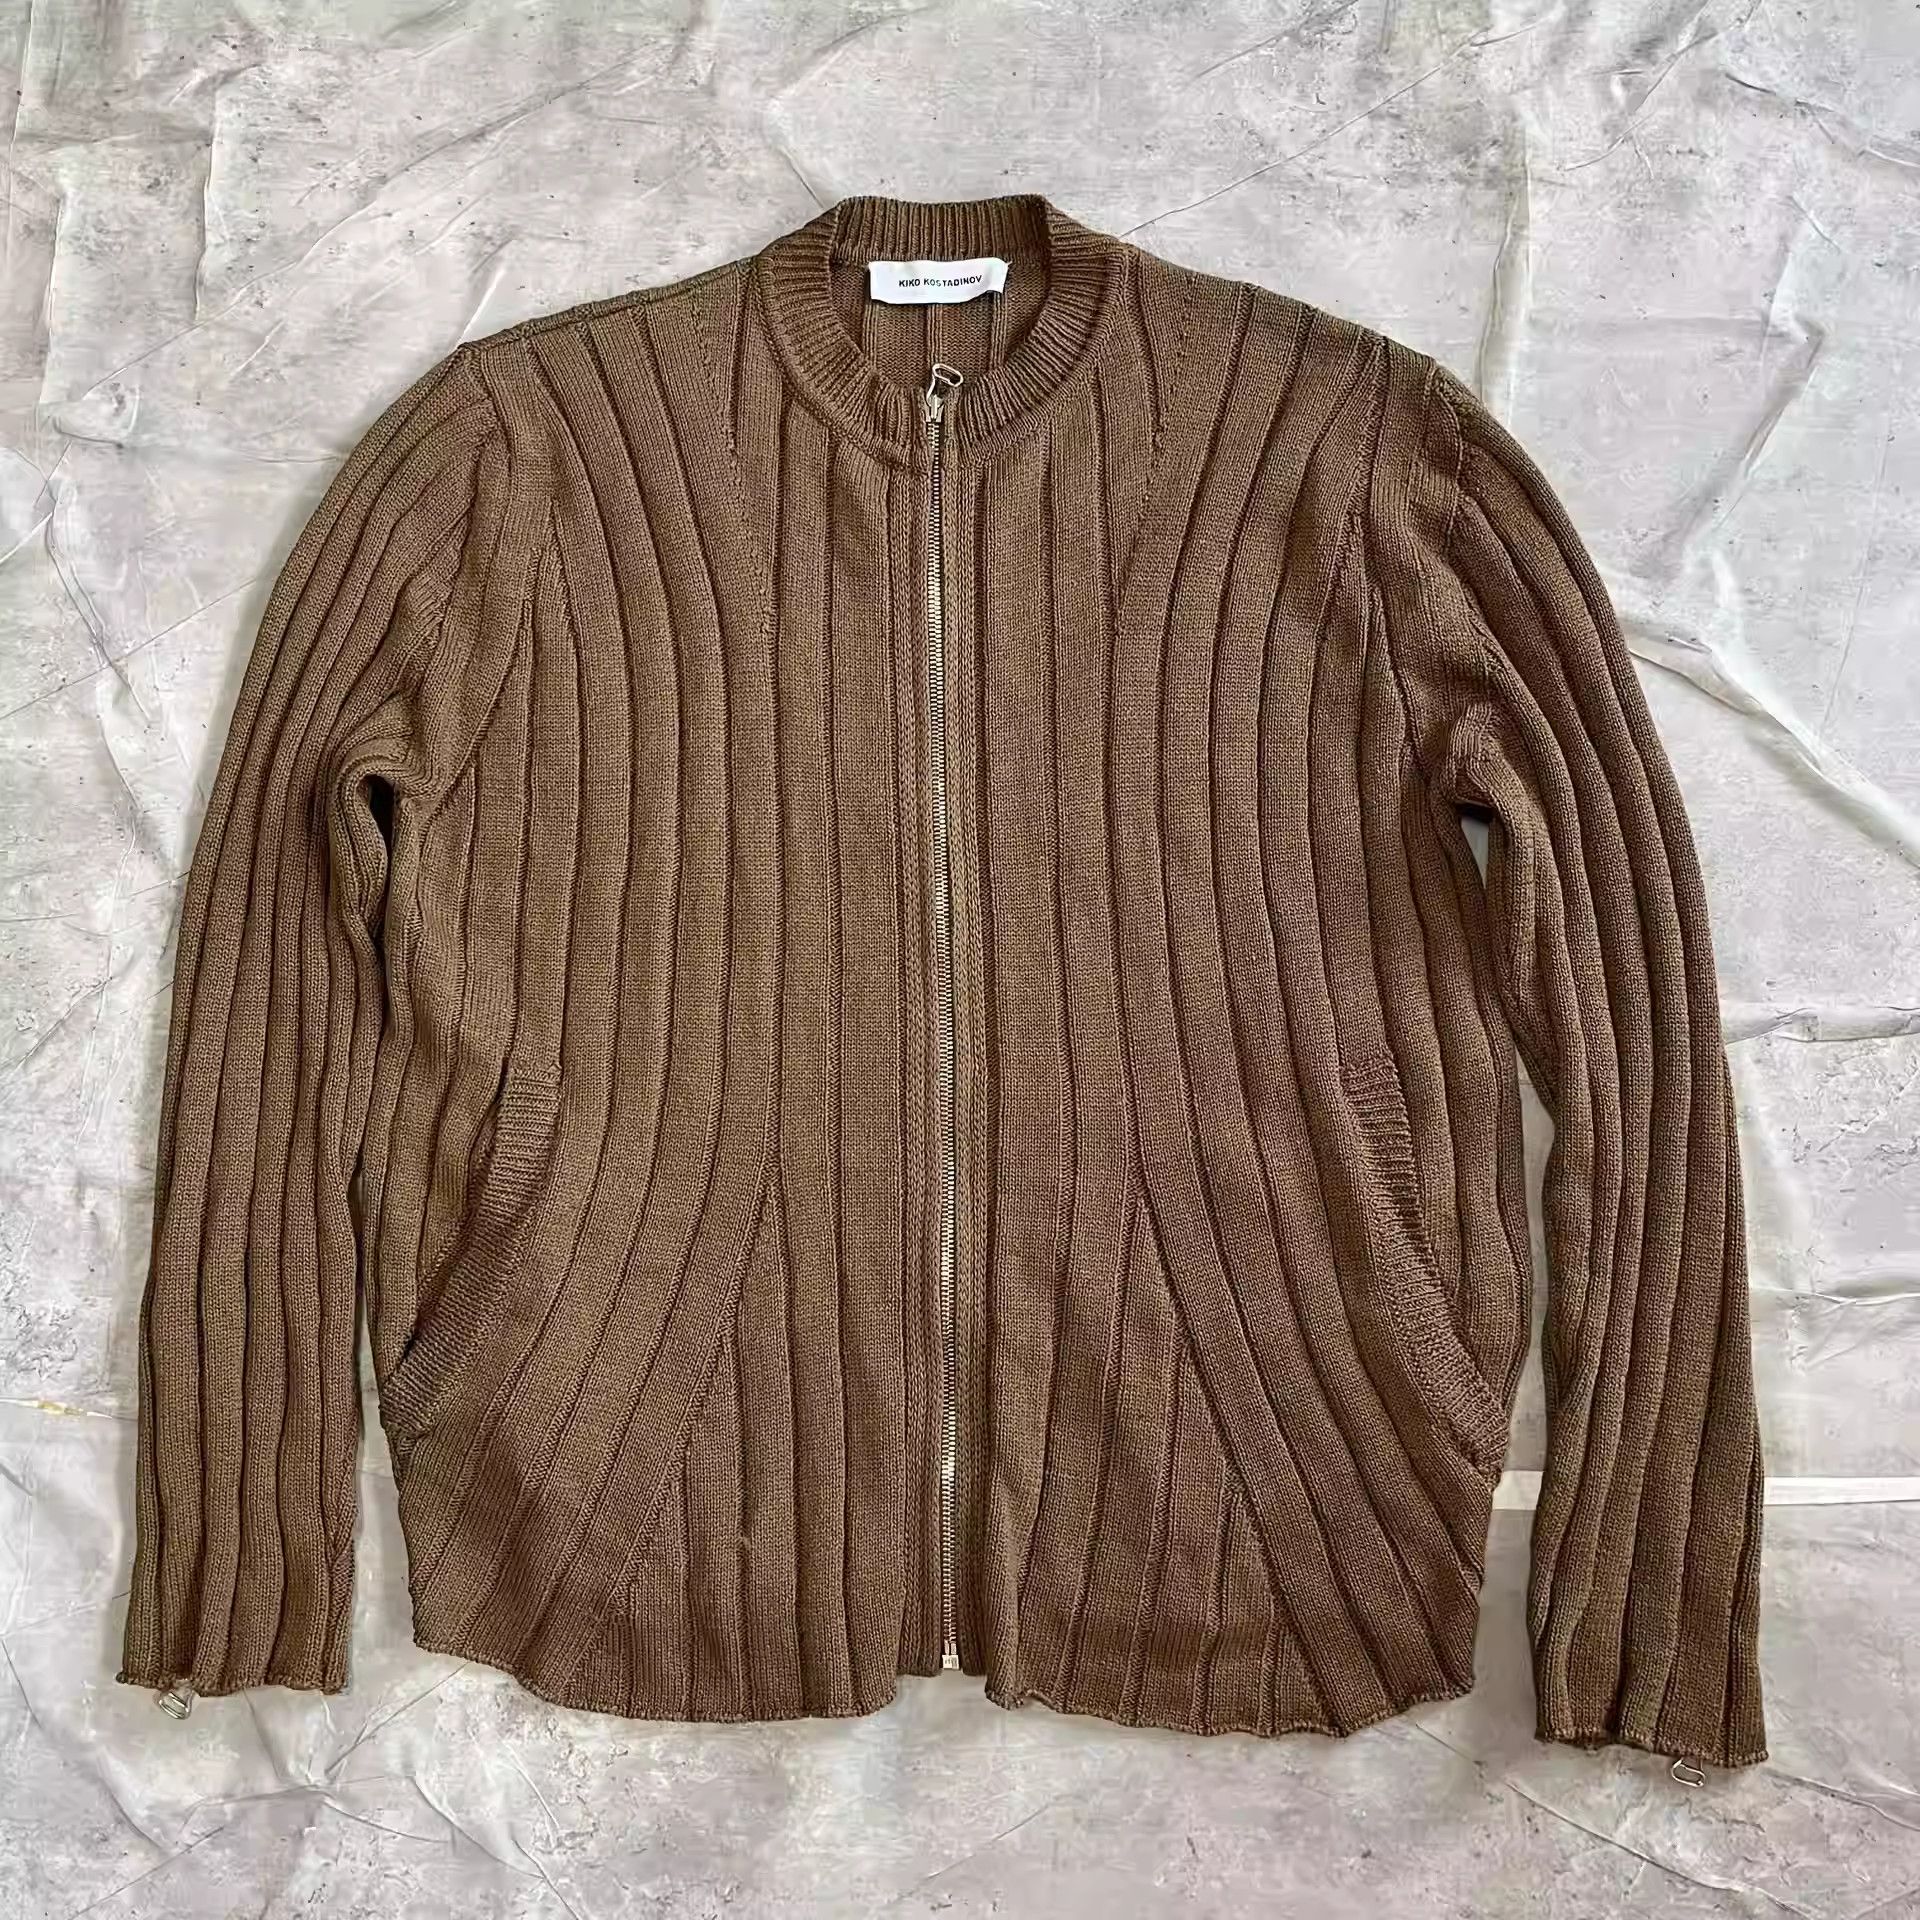 Kiko Kostadinov Kiko Kostadinov 21fw Zipper Cardigan Sweater | Grailed